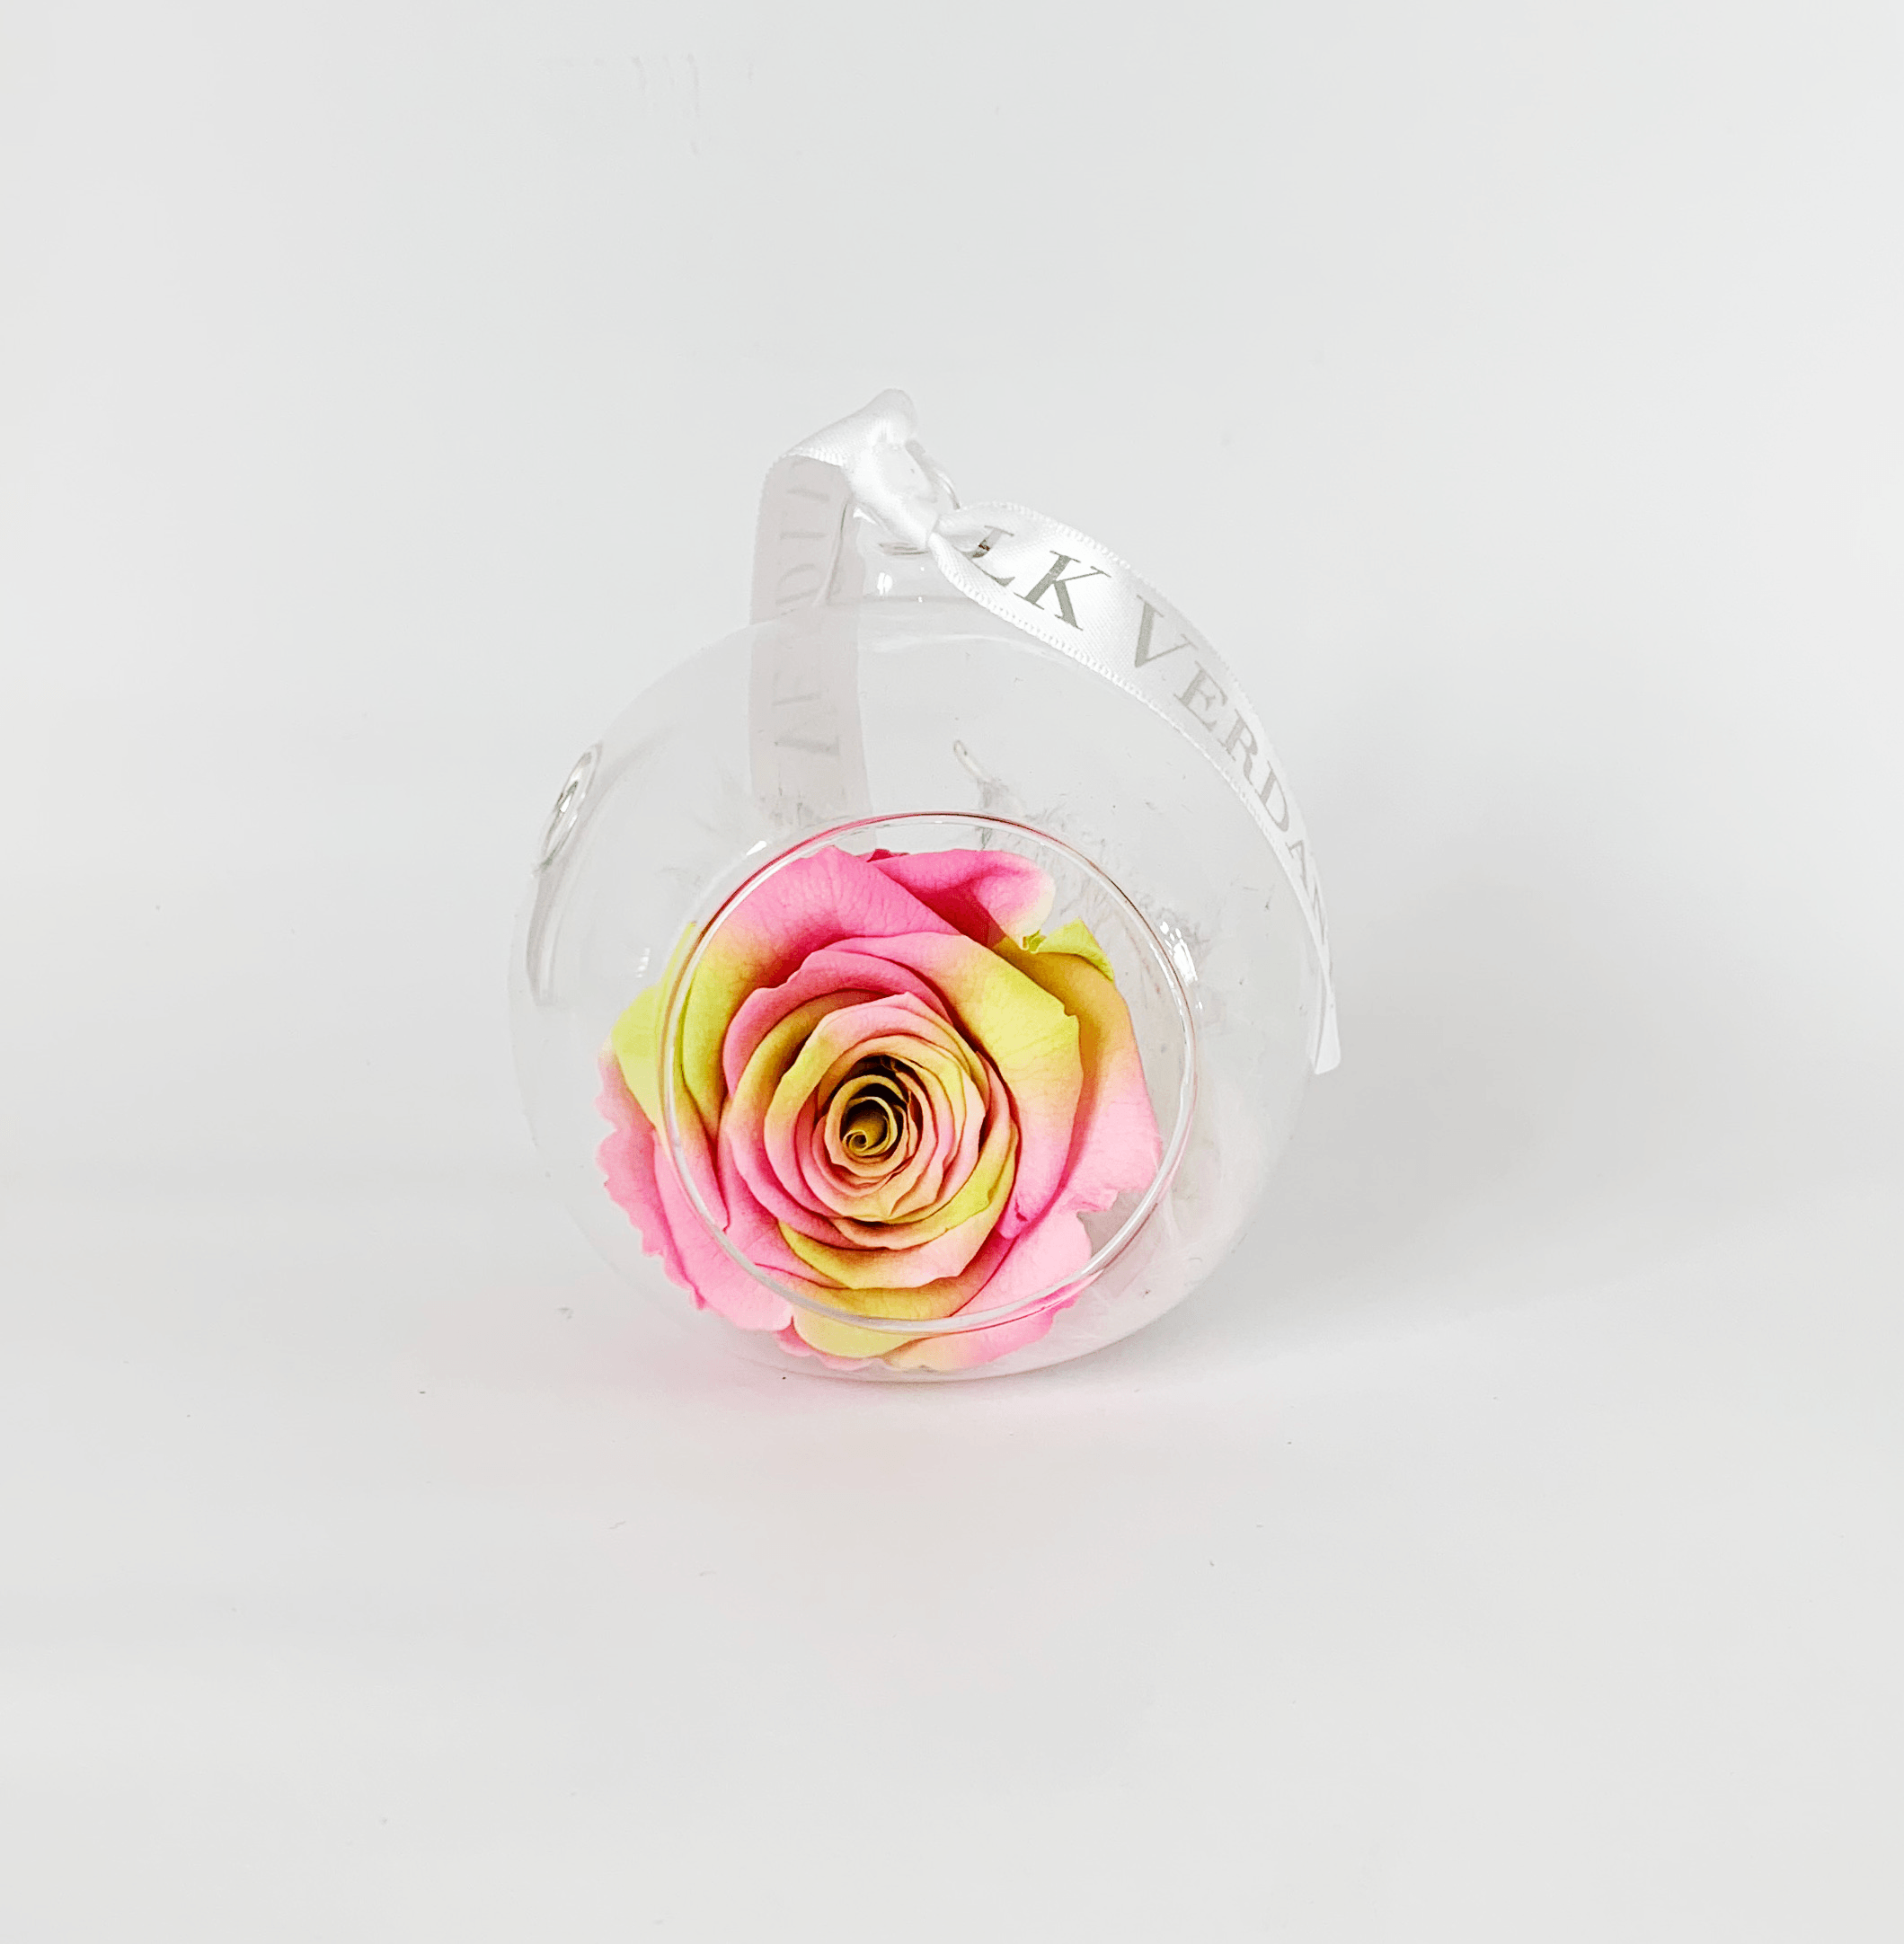 The Always Tooti Forever Rose - Shop for Flowers and Forever Roses - LK VERDANT